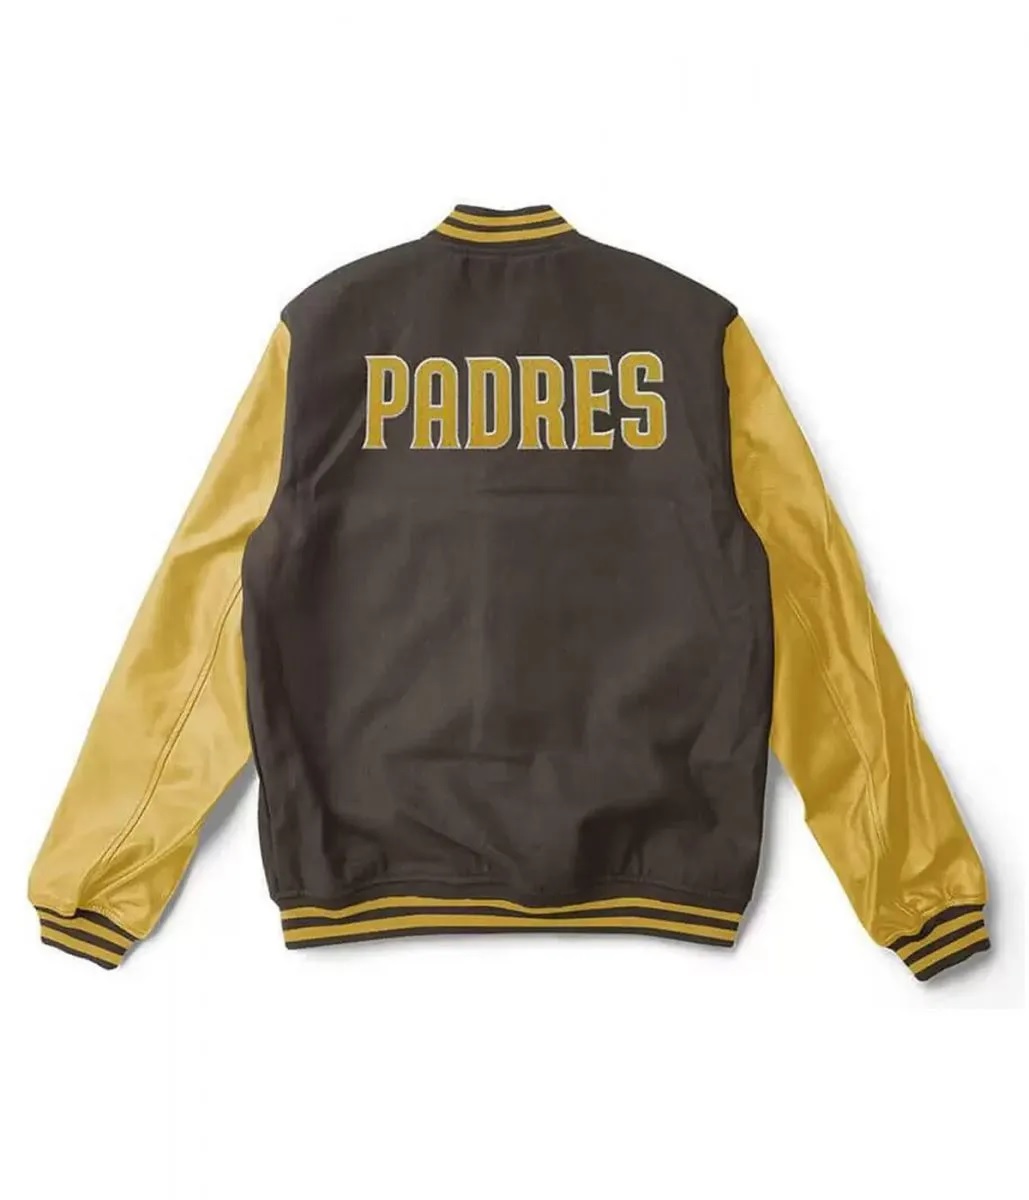 Varsity San Diego Padres Brown and Yellow Jacket